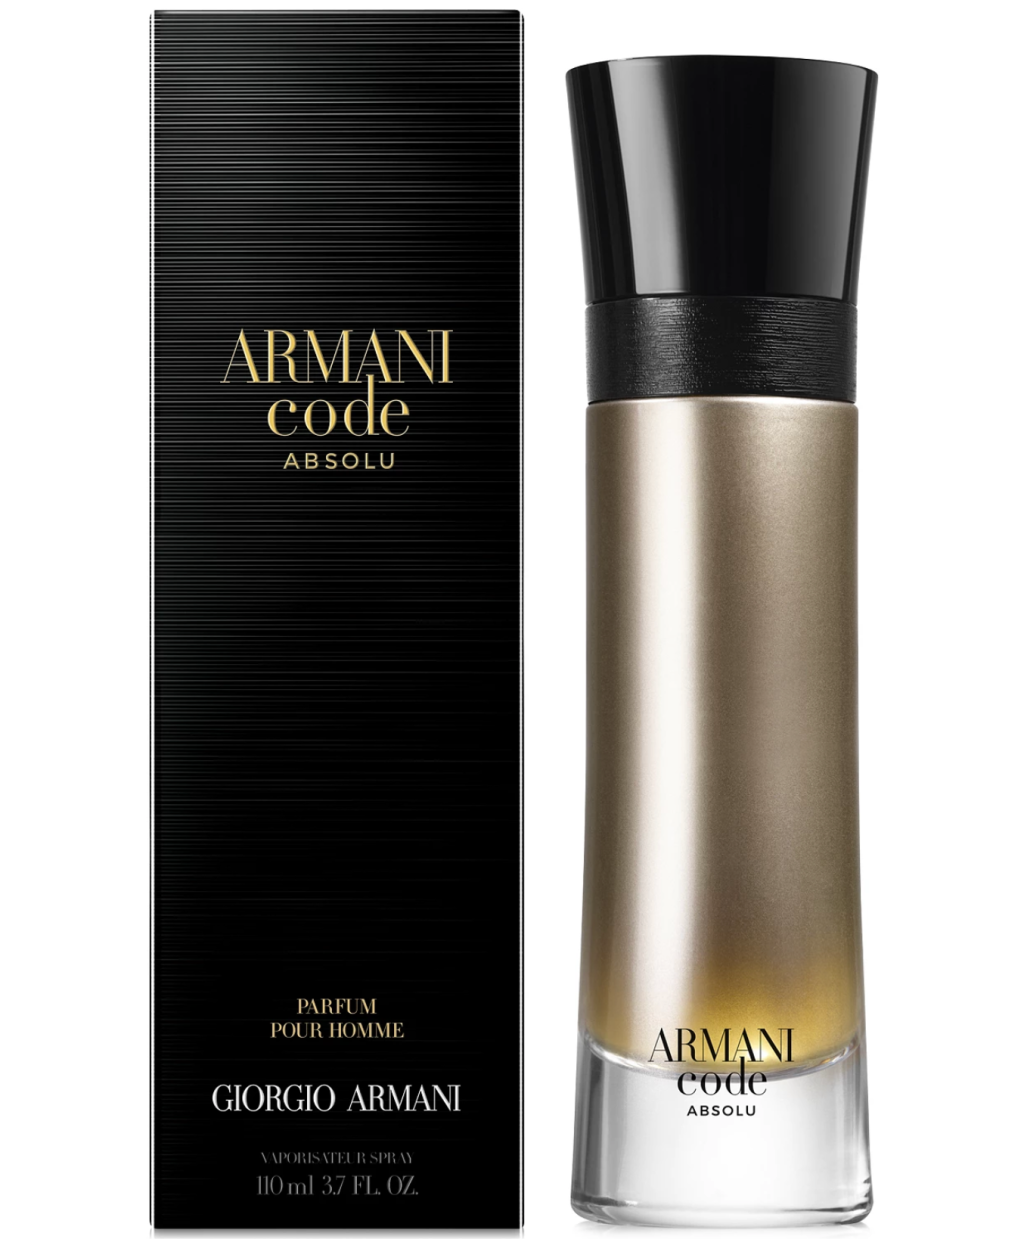 Giorgio Armani Armani Code Absolu Eau de Parfum Spray, 3.7-oz